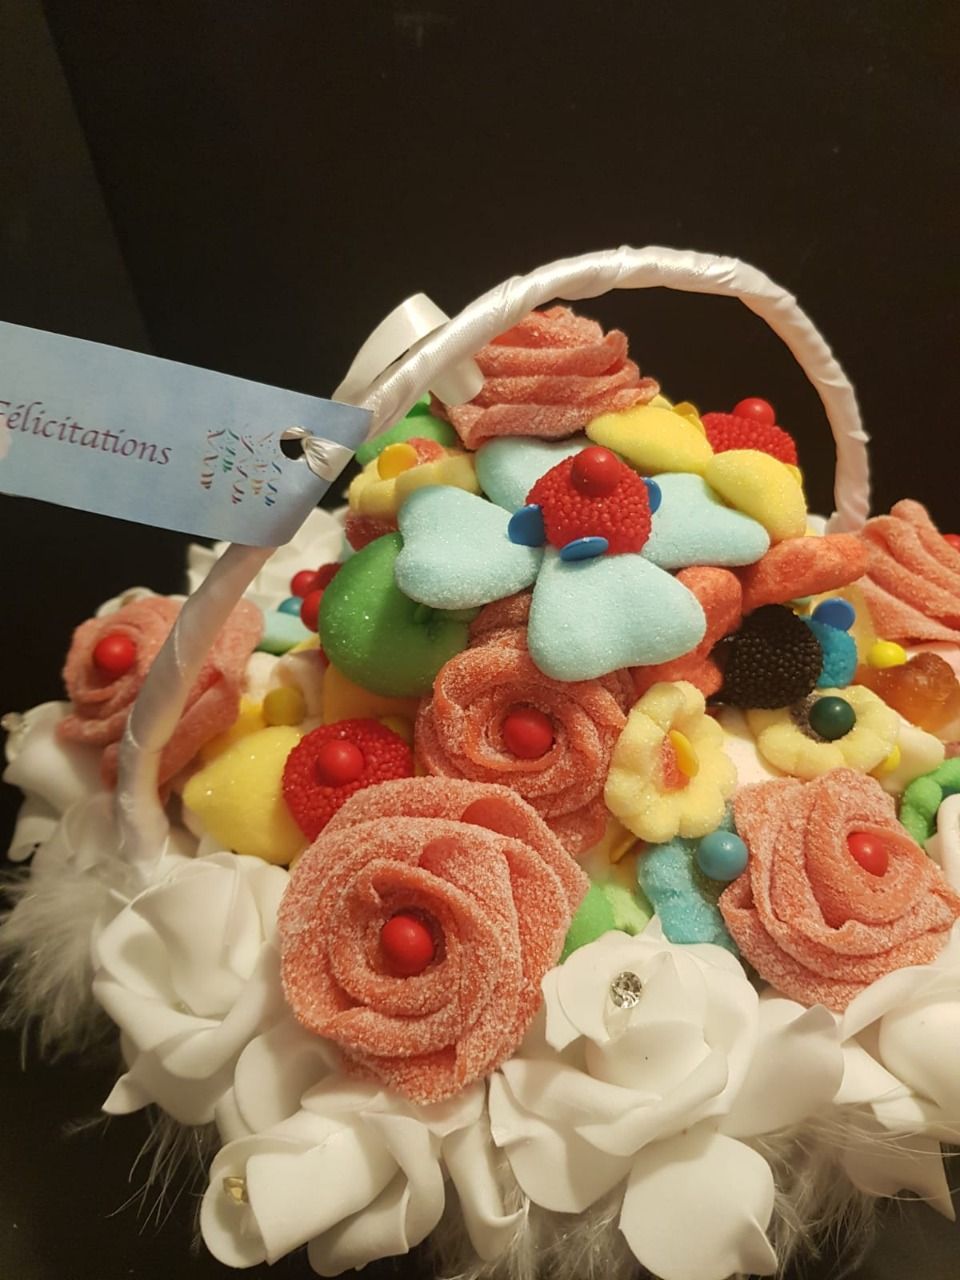 Bouquet de bonbons "Félicitations"